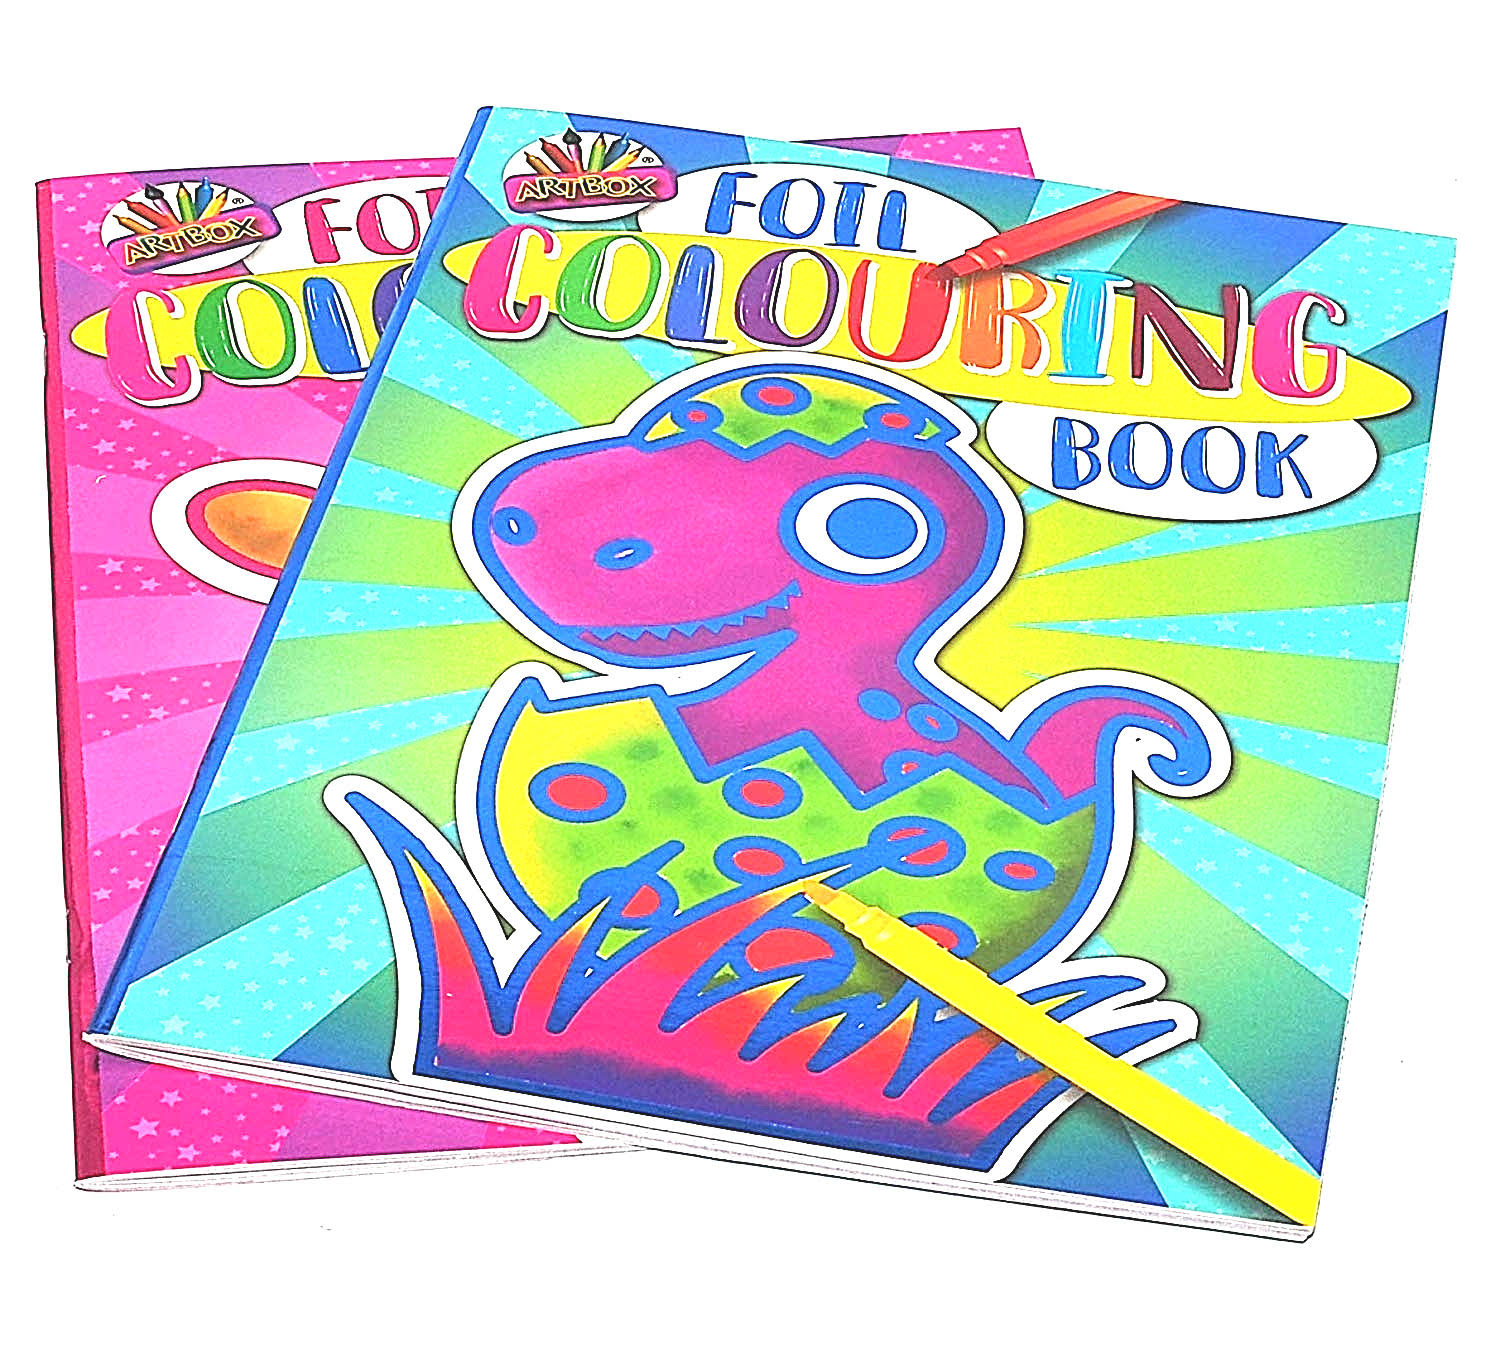 Foil Colouring BOOK